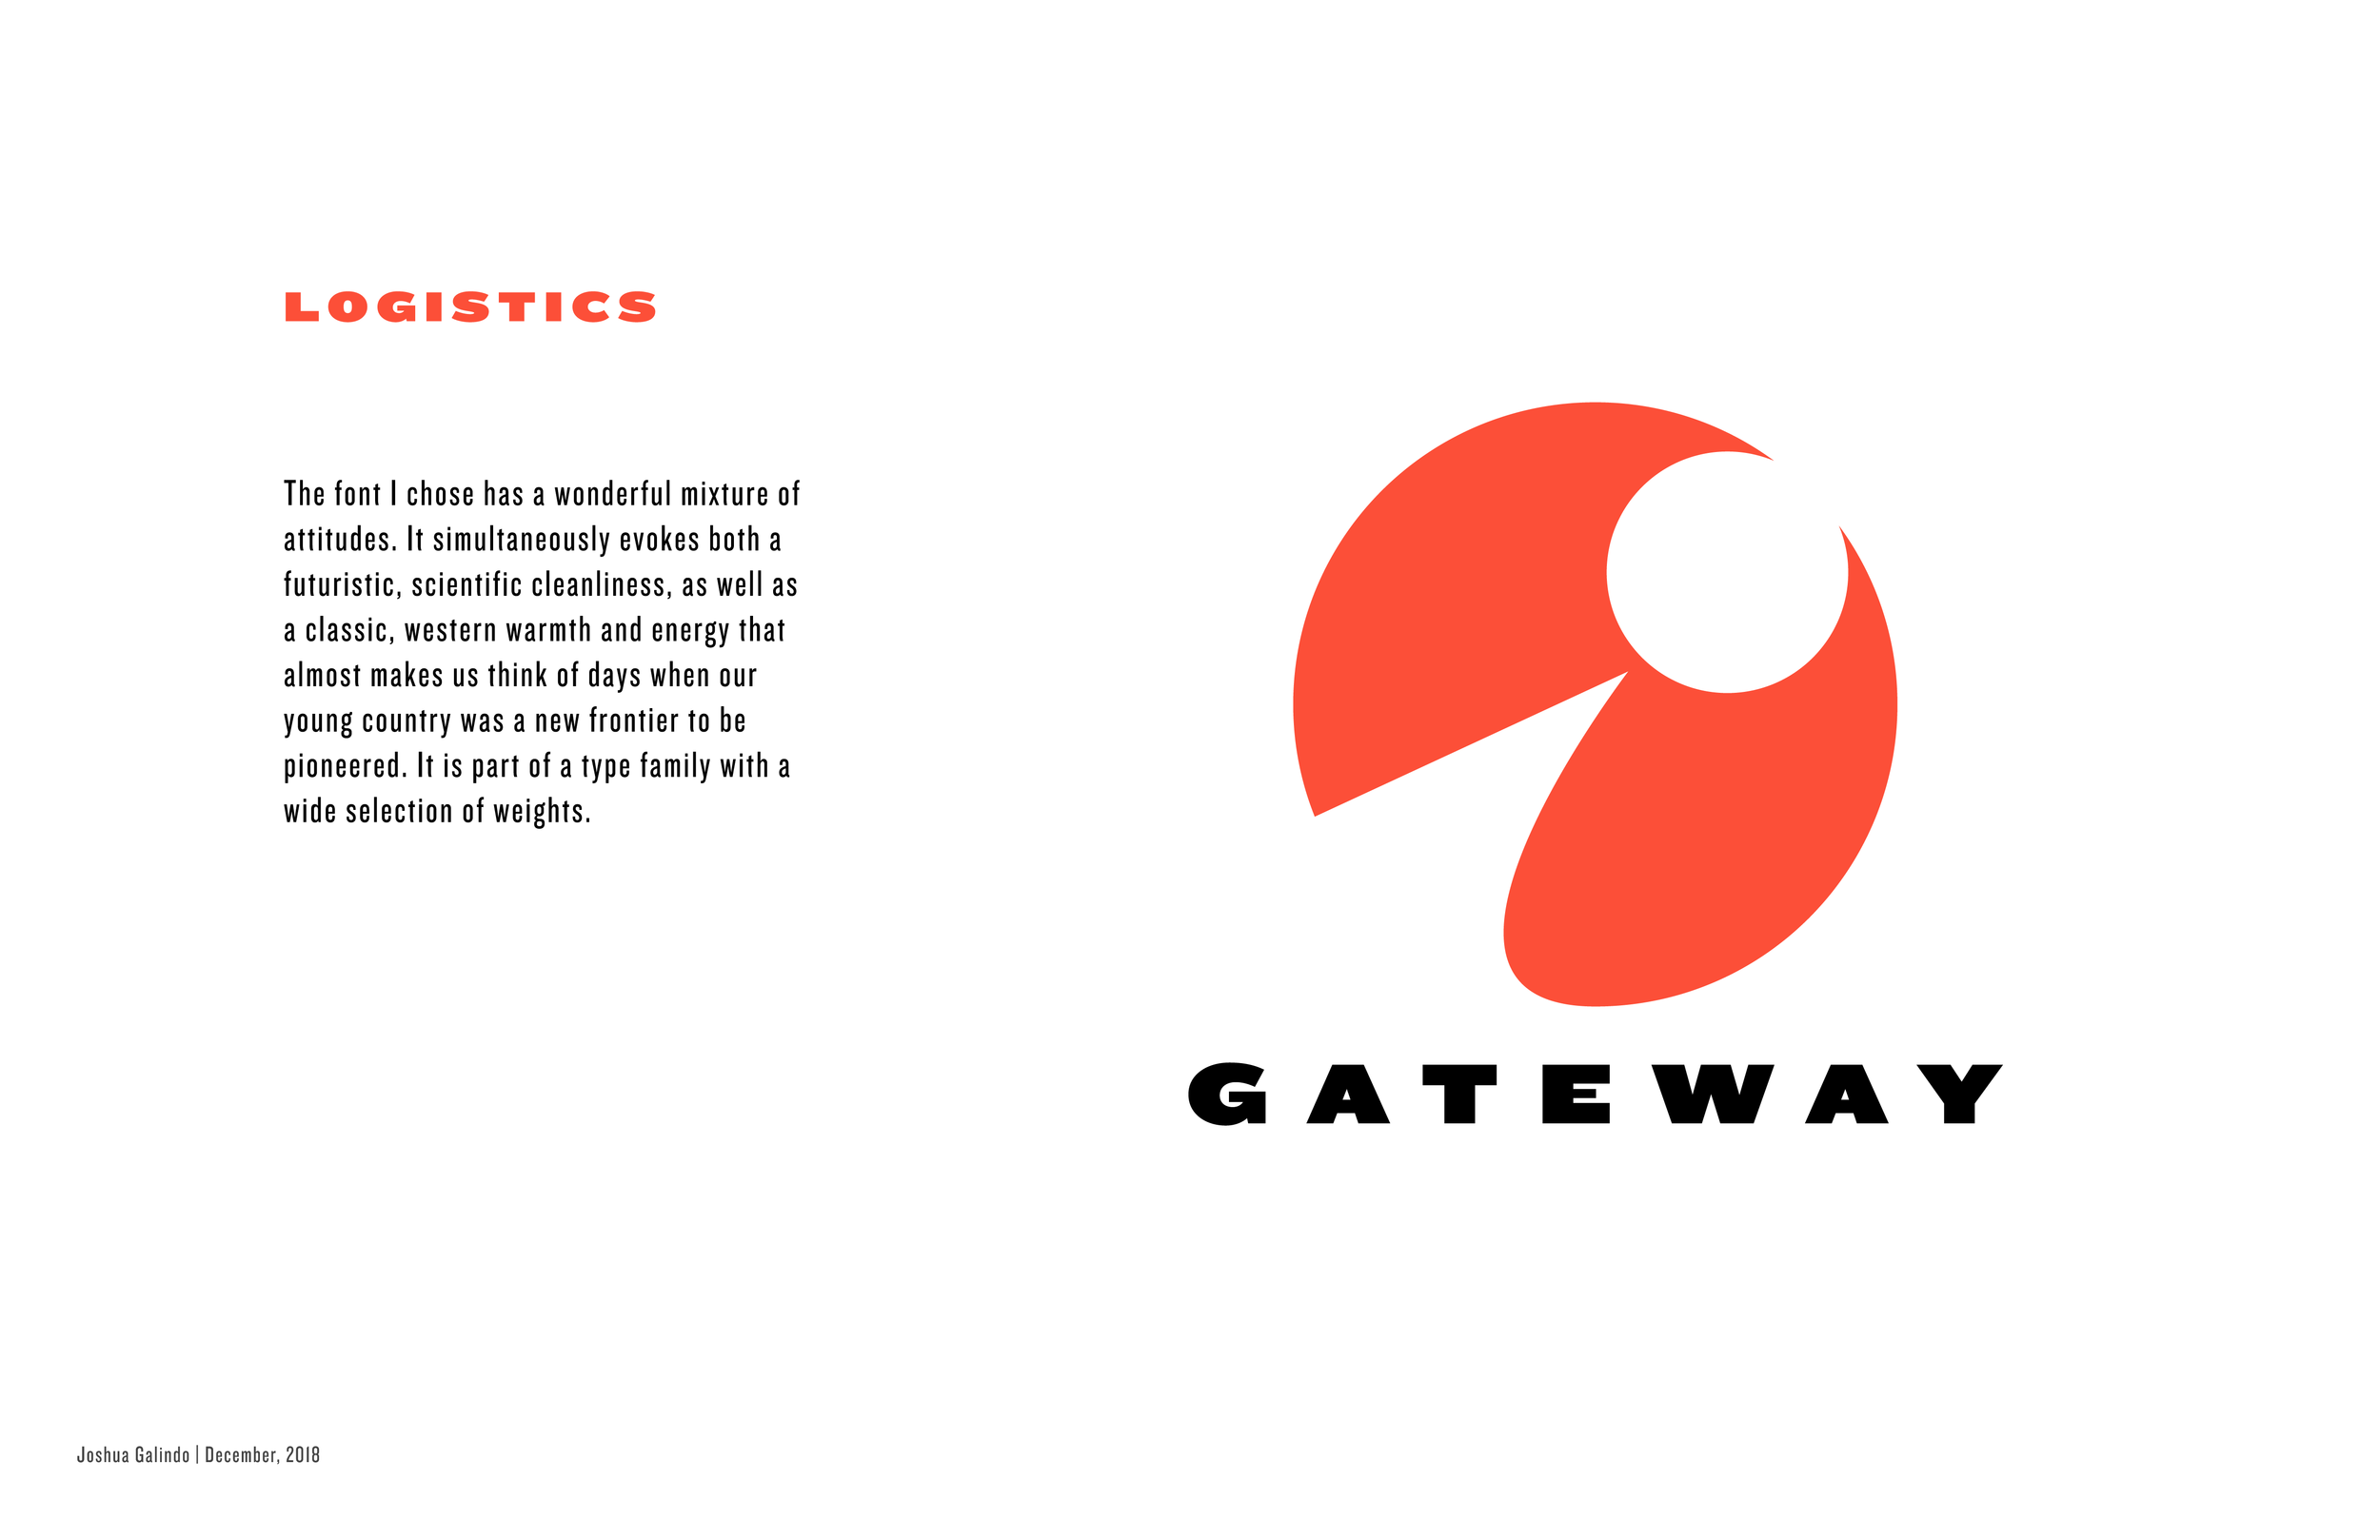 GatewayLogo_Info__JoshuaGalindo_01-13.png